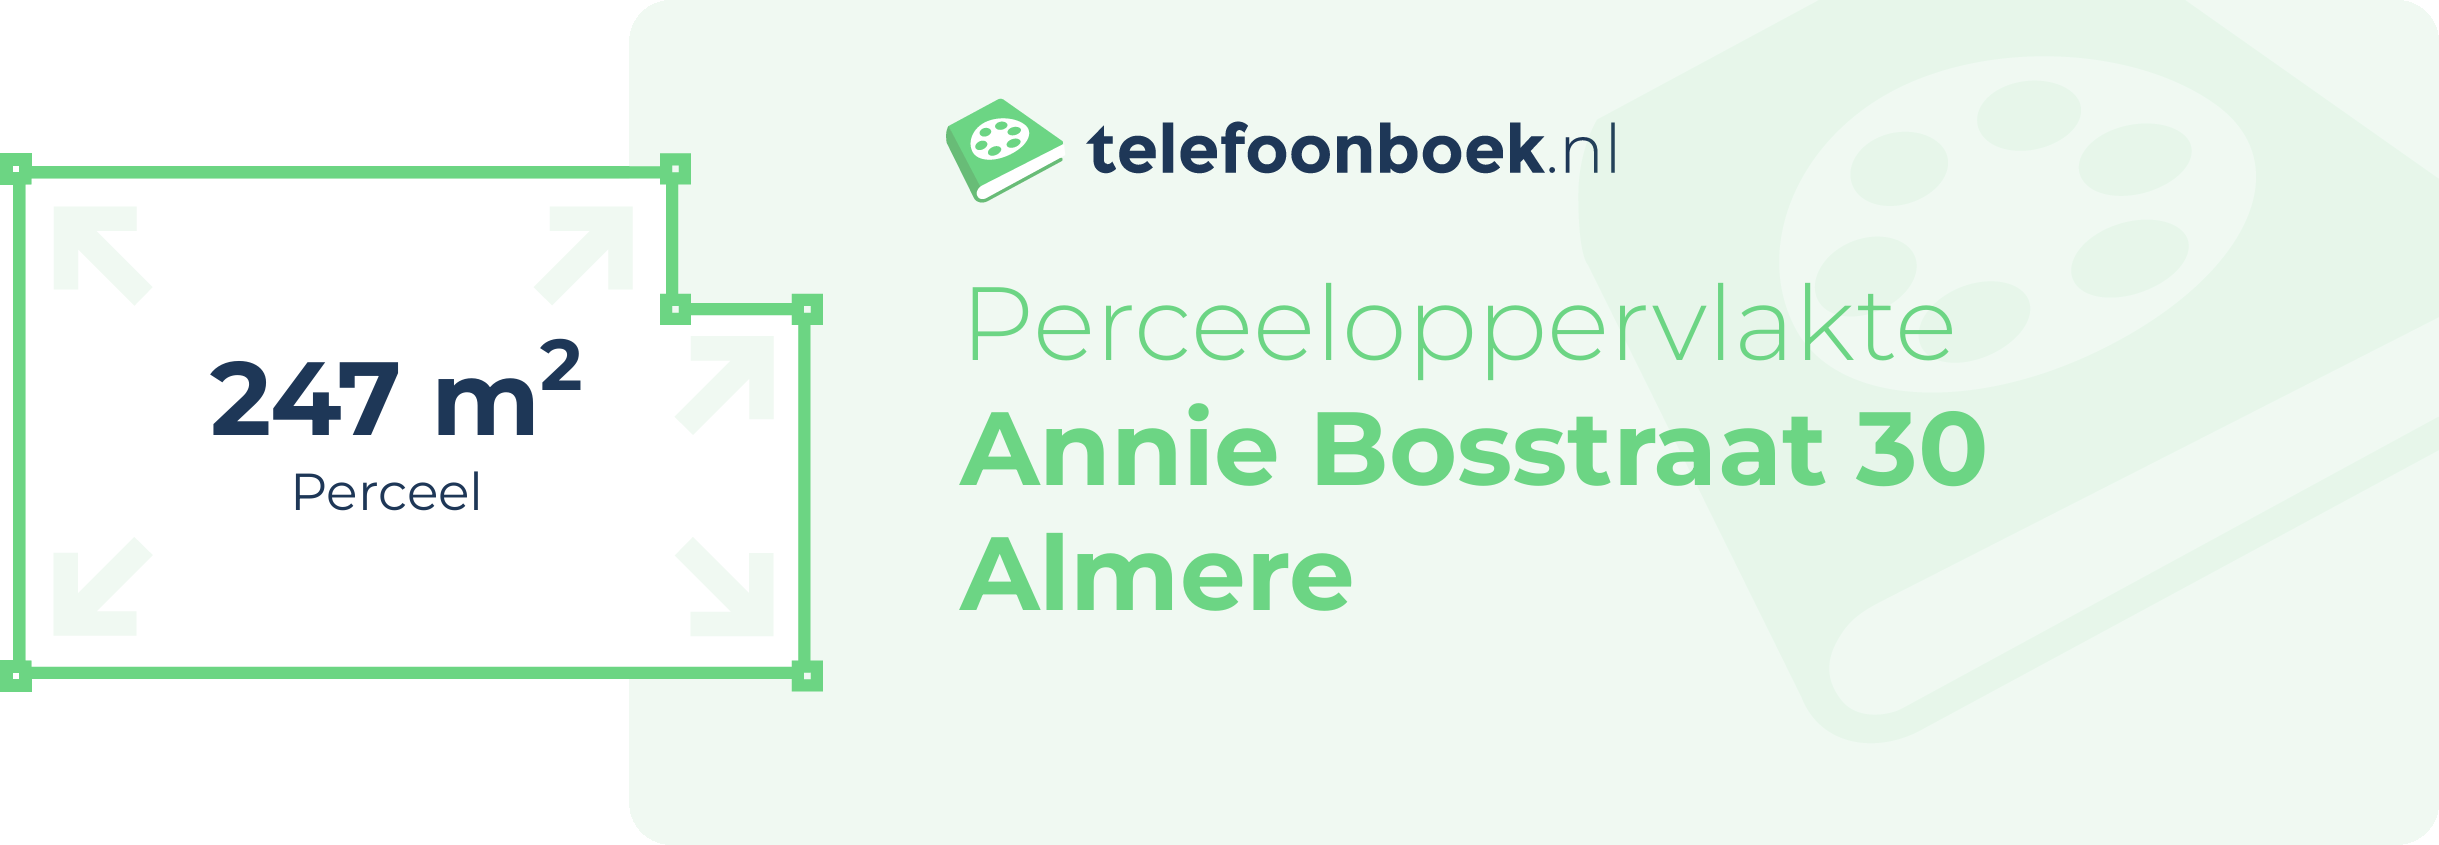 Perceeloppervlakte Annie Bosstraat 30 Almere